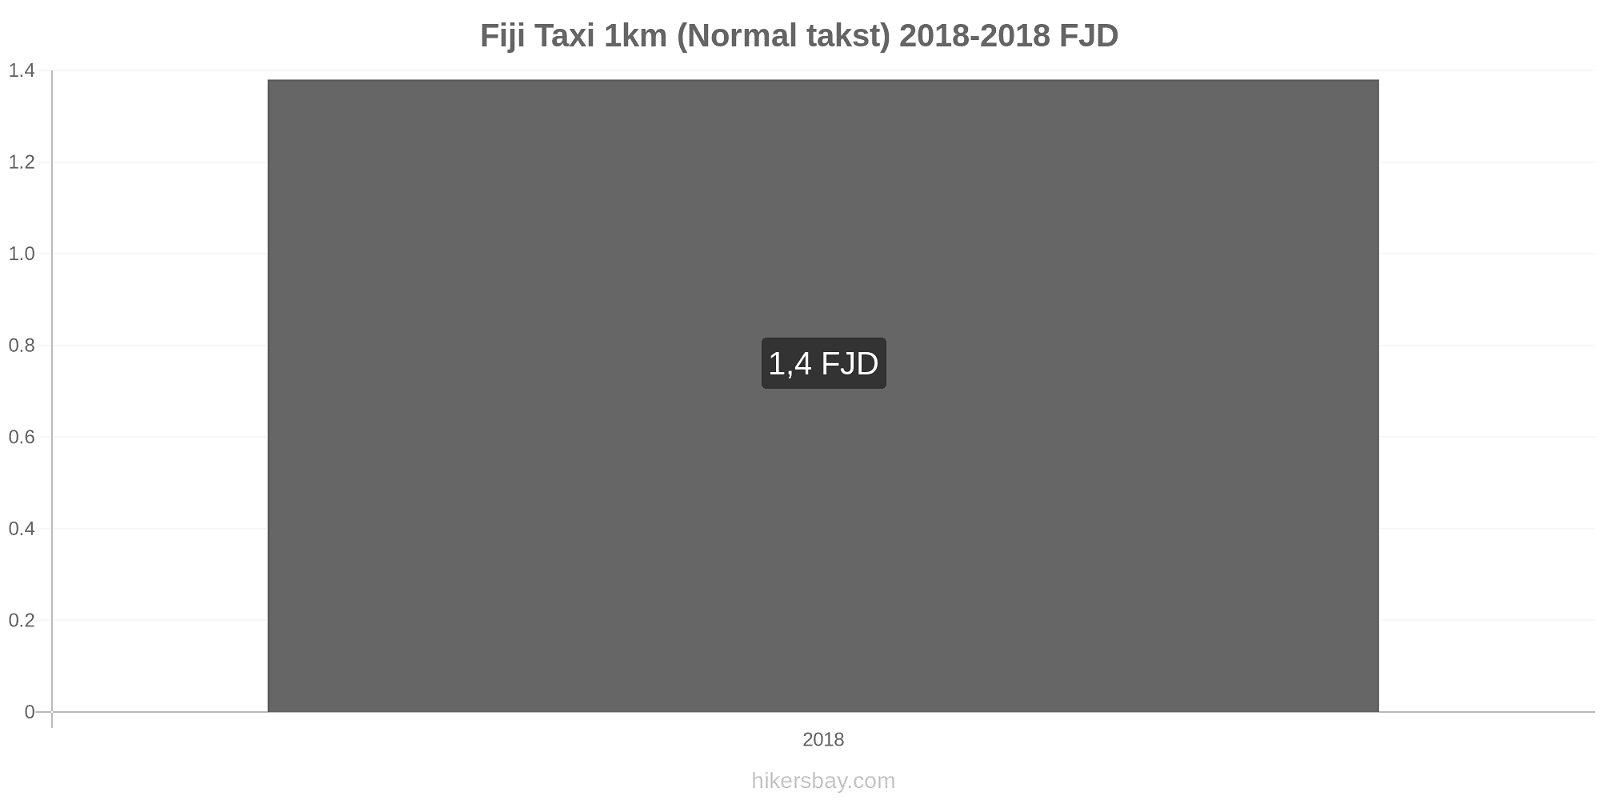 Fiji prisændringer Taxi 1km (normal takst) hikersbay.com